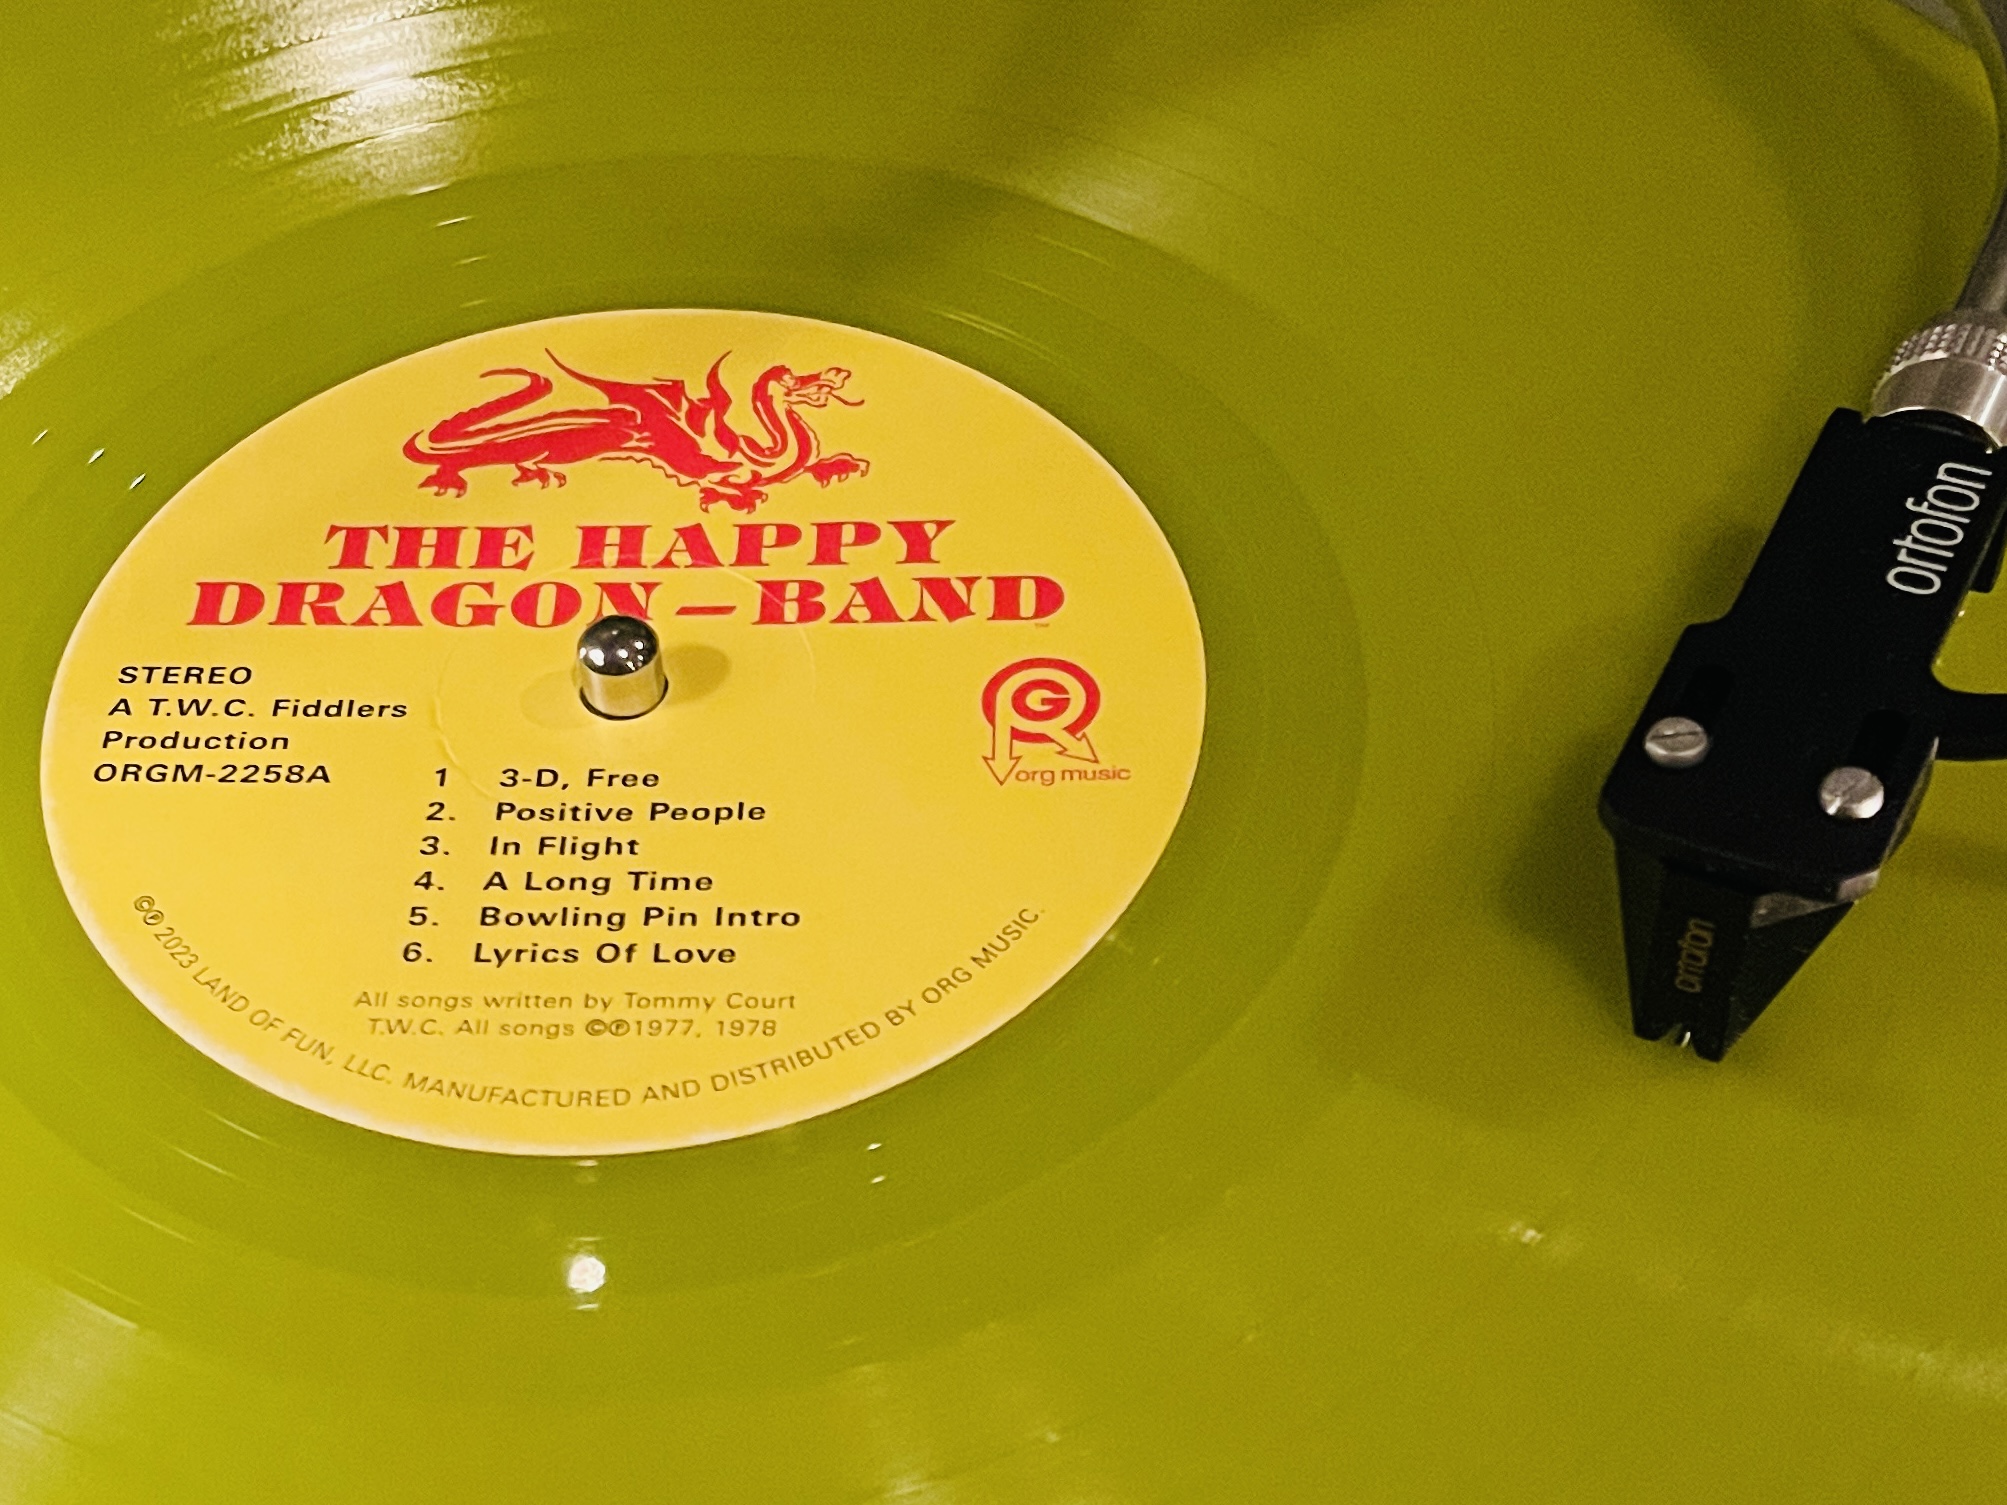 The Happy Dragon Band on yellow vinyl and an Ortofon black headshell